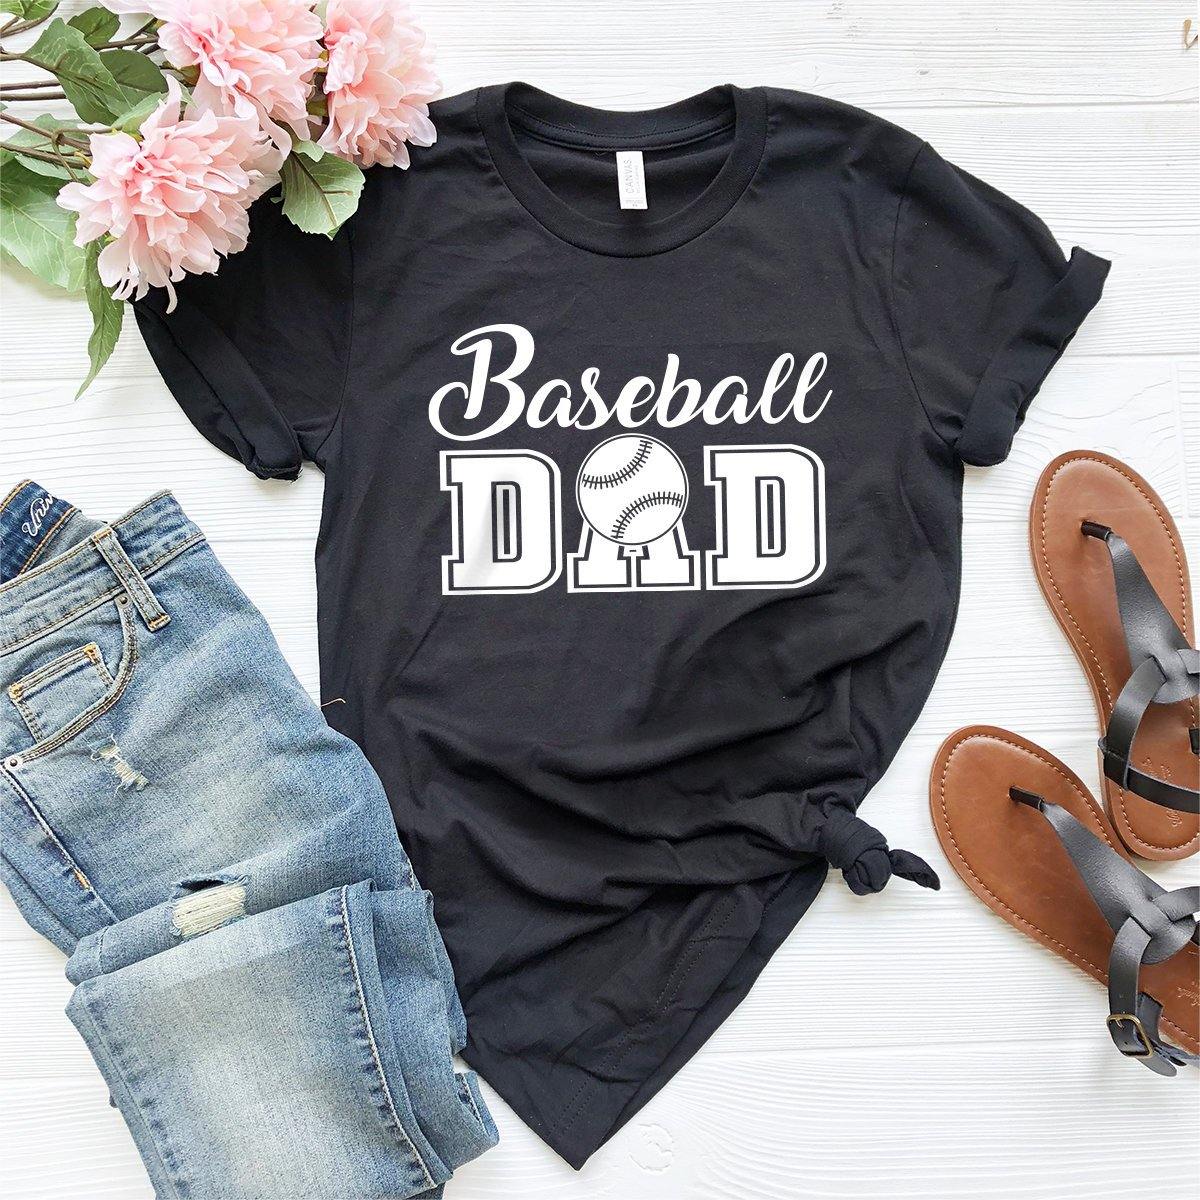 Baseball Family Shirt, Matching Baseball Family Tee, Baseball Family T-Shirt, Baseball Dad Shirt, Baseball Mom Tshirt, Baseball Bro T-Shirt - Fastdeliverytees.com